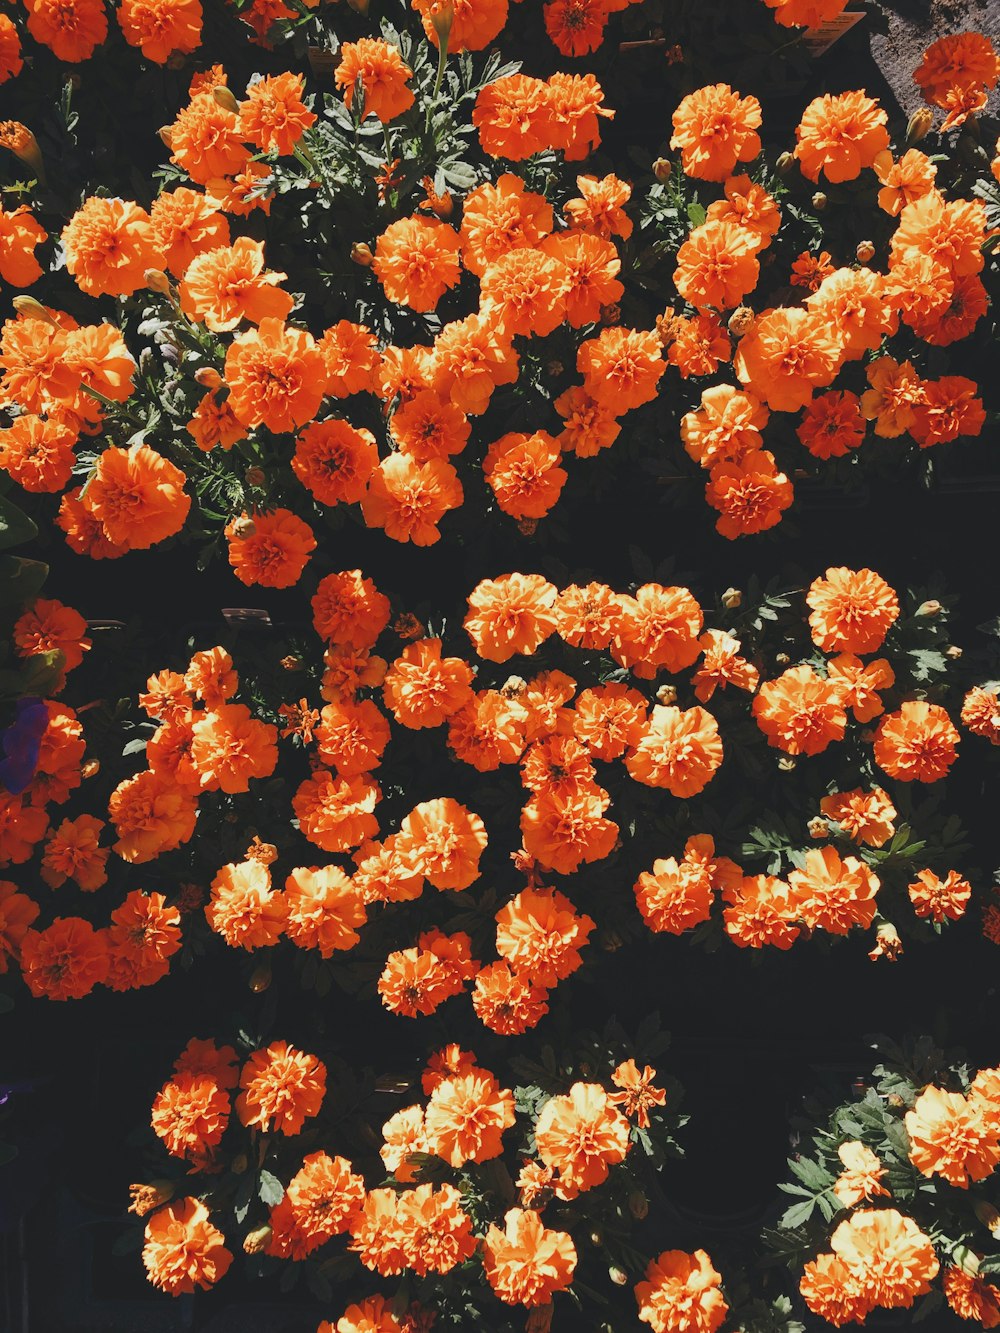 blooming orange petaled flowers at daytime